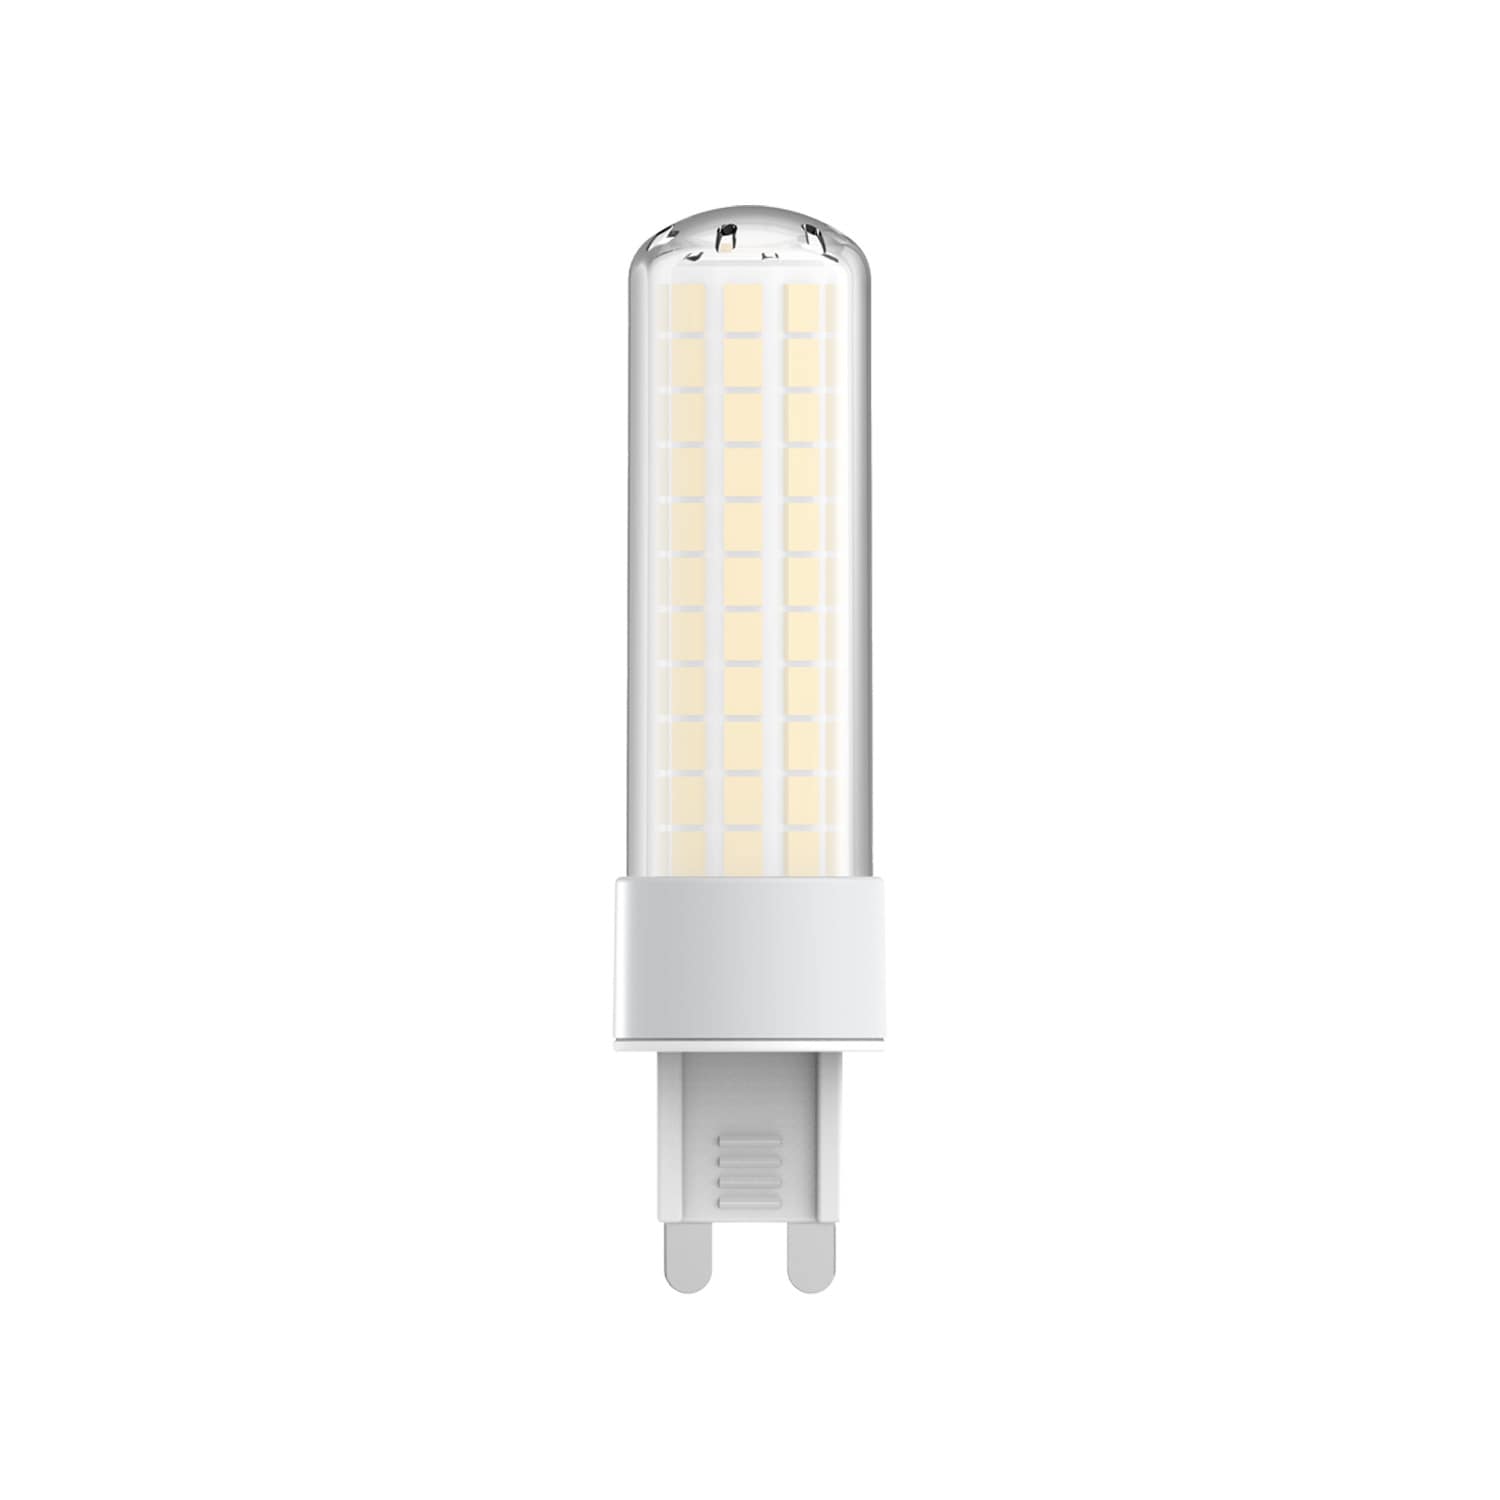  comzler G9 LED Bulb 4000K Natural Daylight, 6W 60 Watt Halogen  Equivalent G9 LED Bulb Bi Pin Ceramic Base, 600LM T4 G9 Light Bulbs for  Chandeliers No-dimmable 6 Pack : Everything